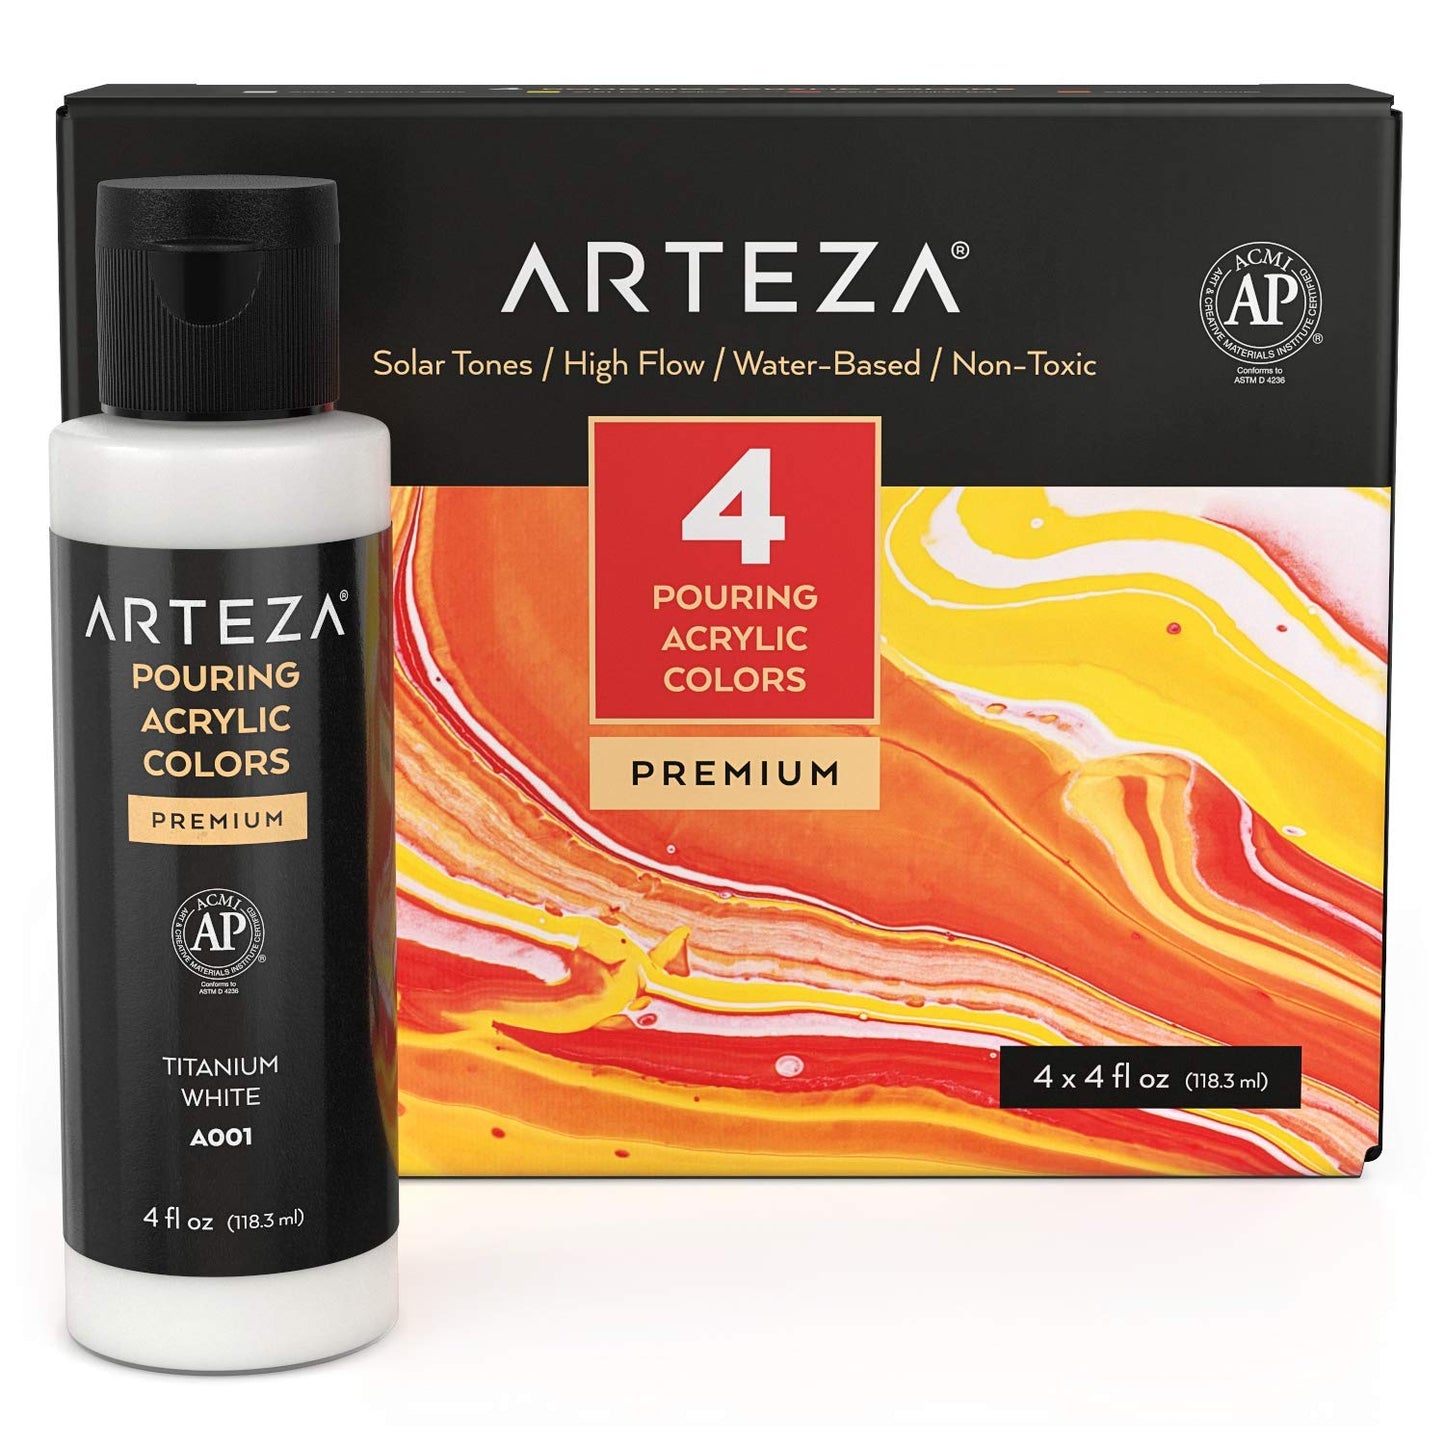 Arteza Pouring Acrylic Paint, Solar Tones, 4oz Bottles - Set of 4